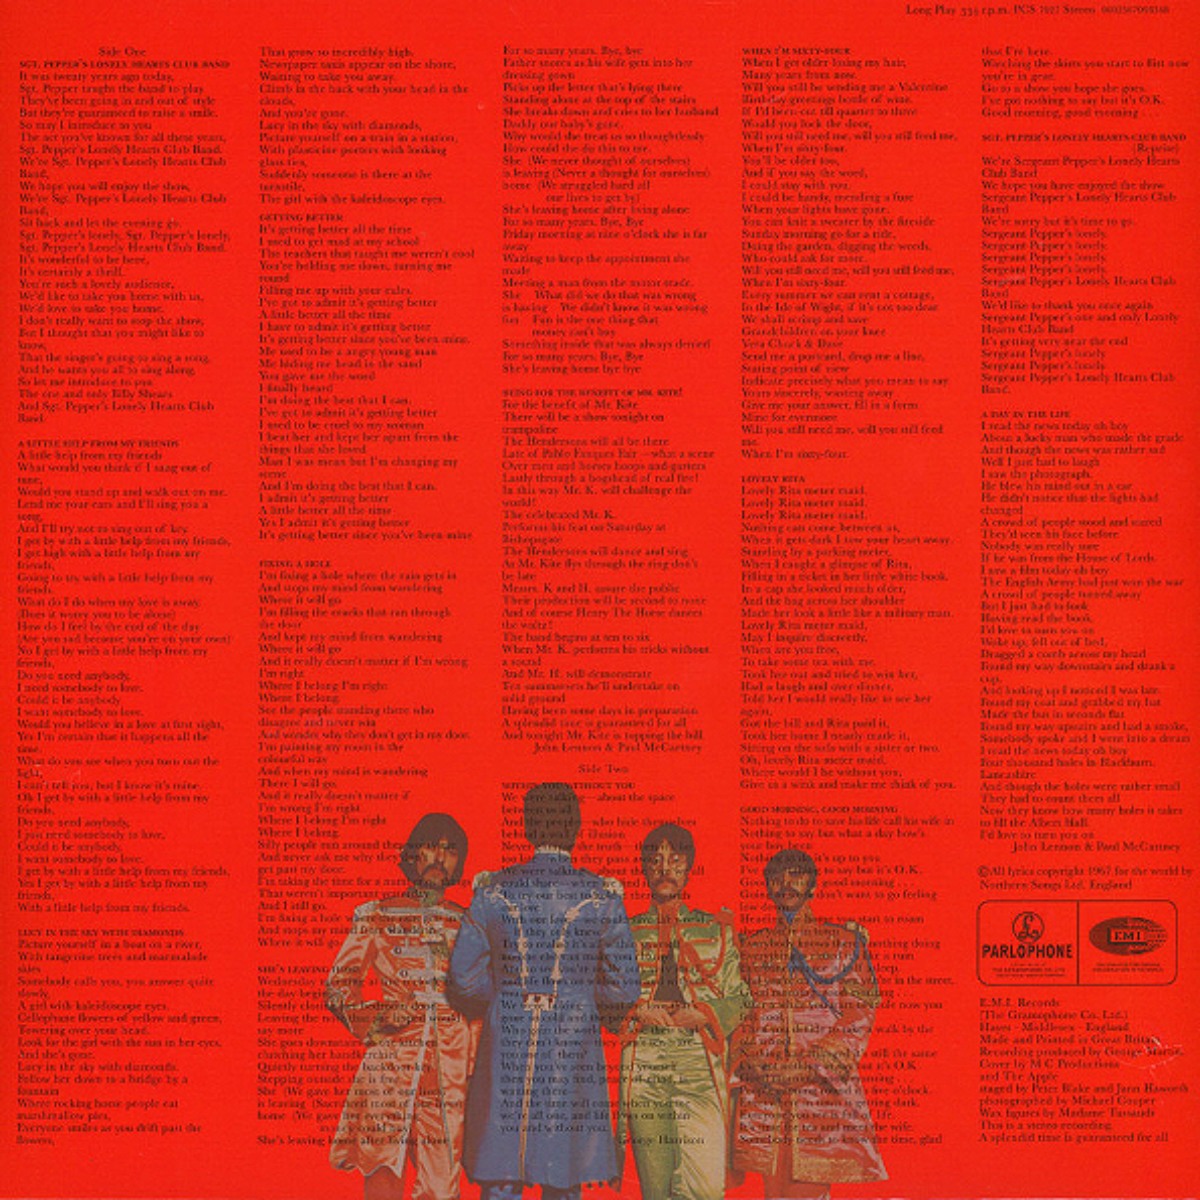 Обложка альбома «Sgt. Pepper's Lonely Hearts Club Band» группы The Beatles, обратная сторона